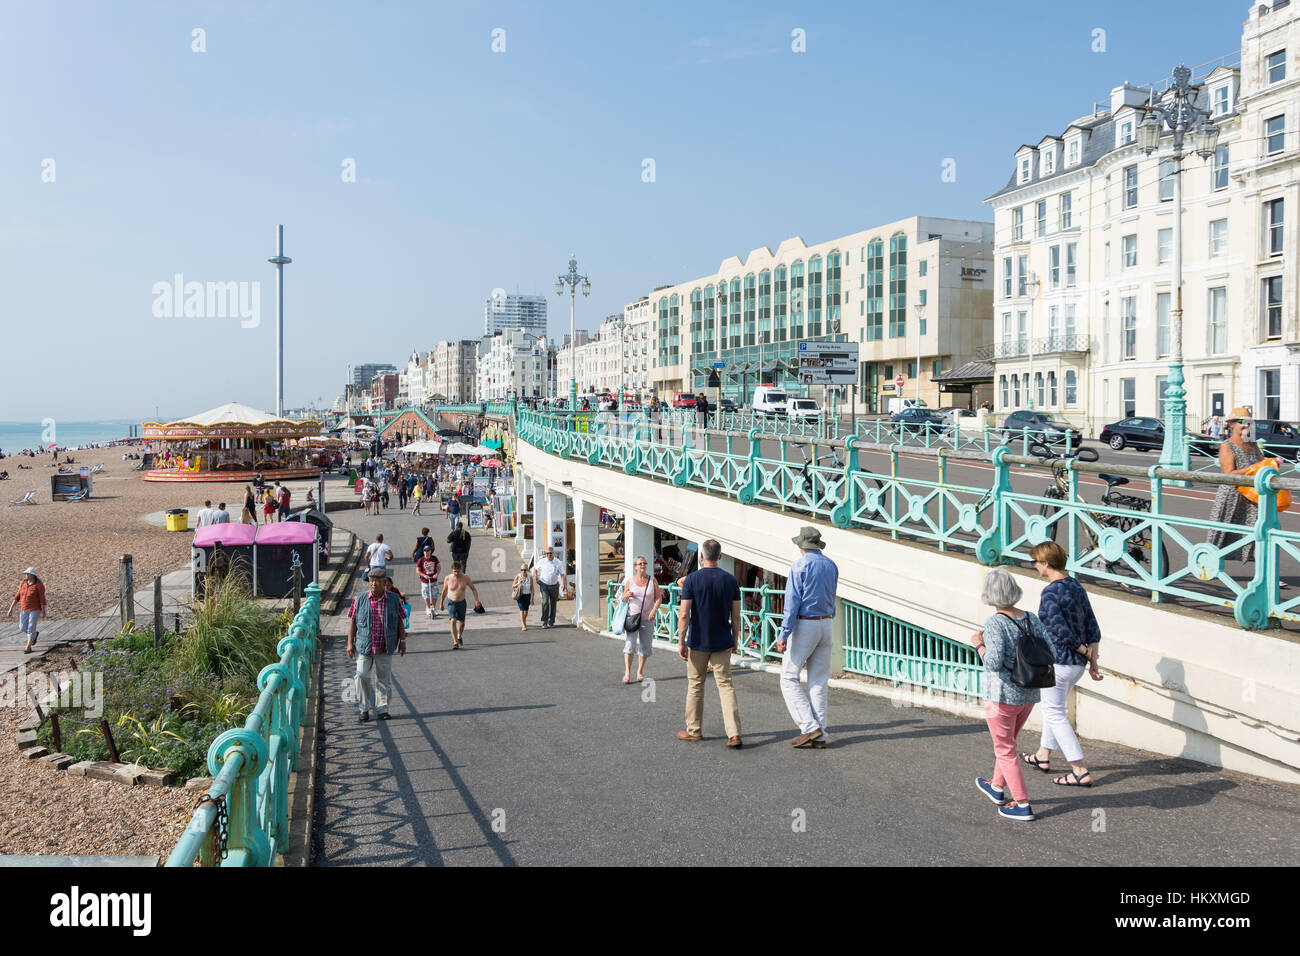 Promenade de la plage, Kings Road Arches, Brighton, East Sussex, Angleterre, Royaume-Uni Banque D'Images